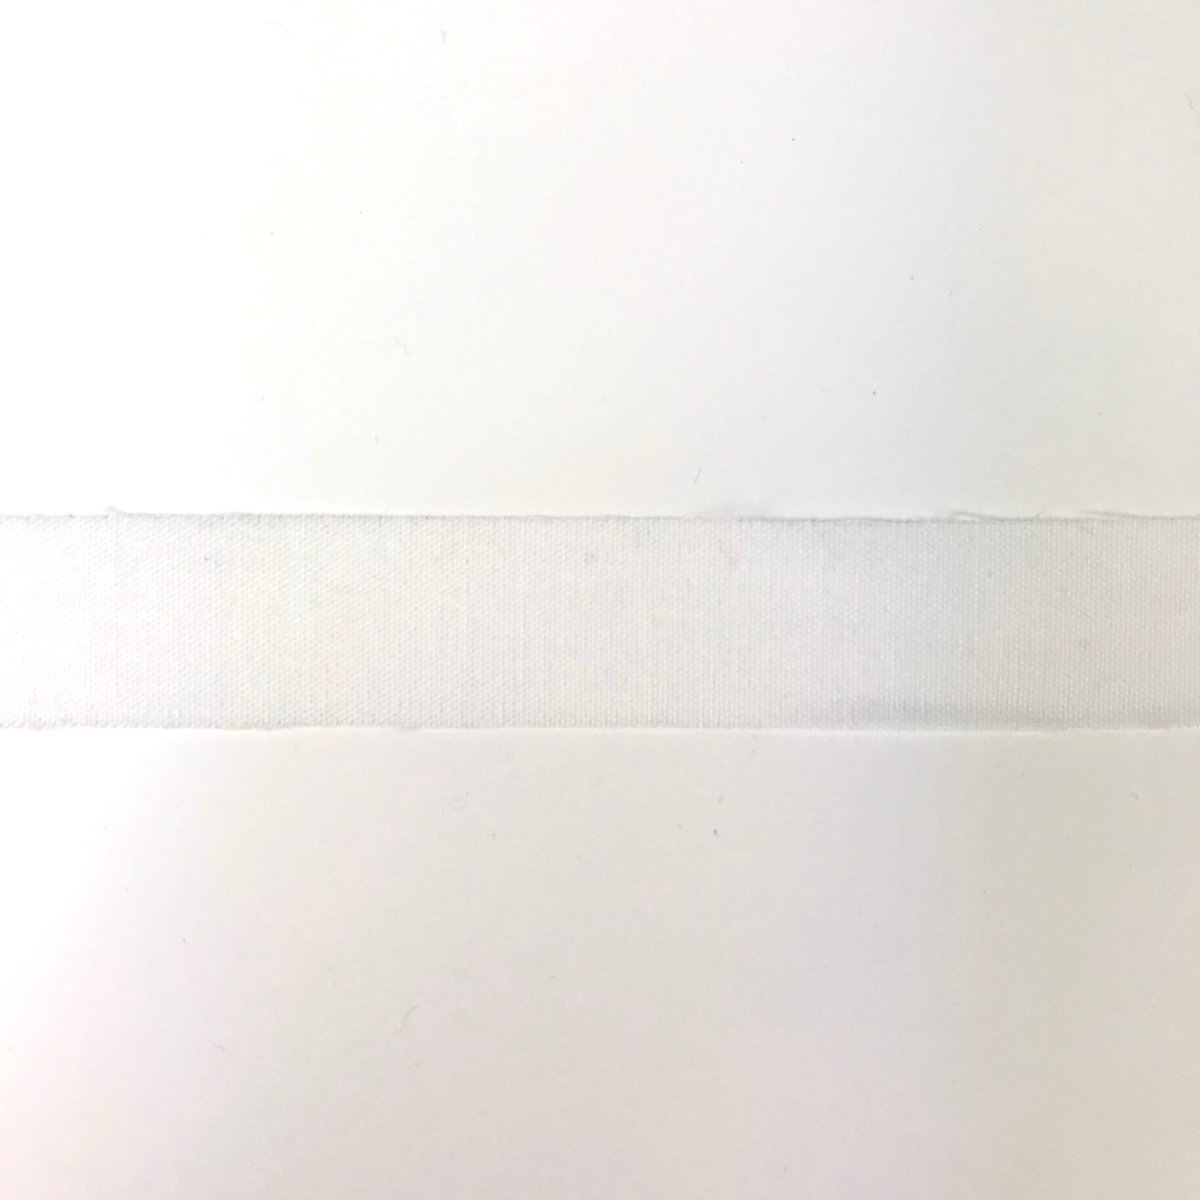 19mm Fine Cotton Fusible Tape - Black or White